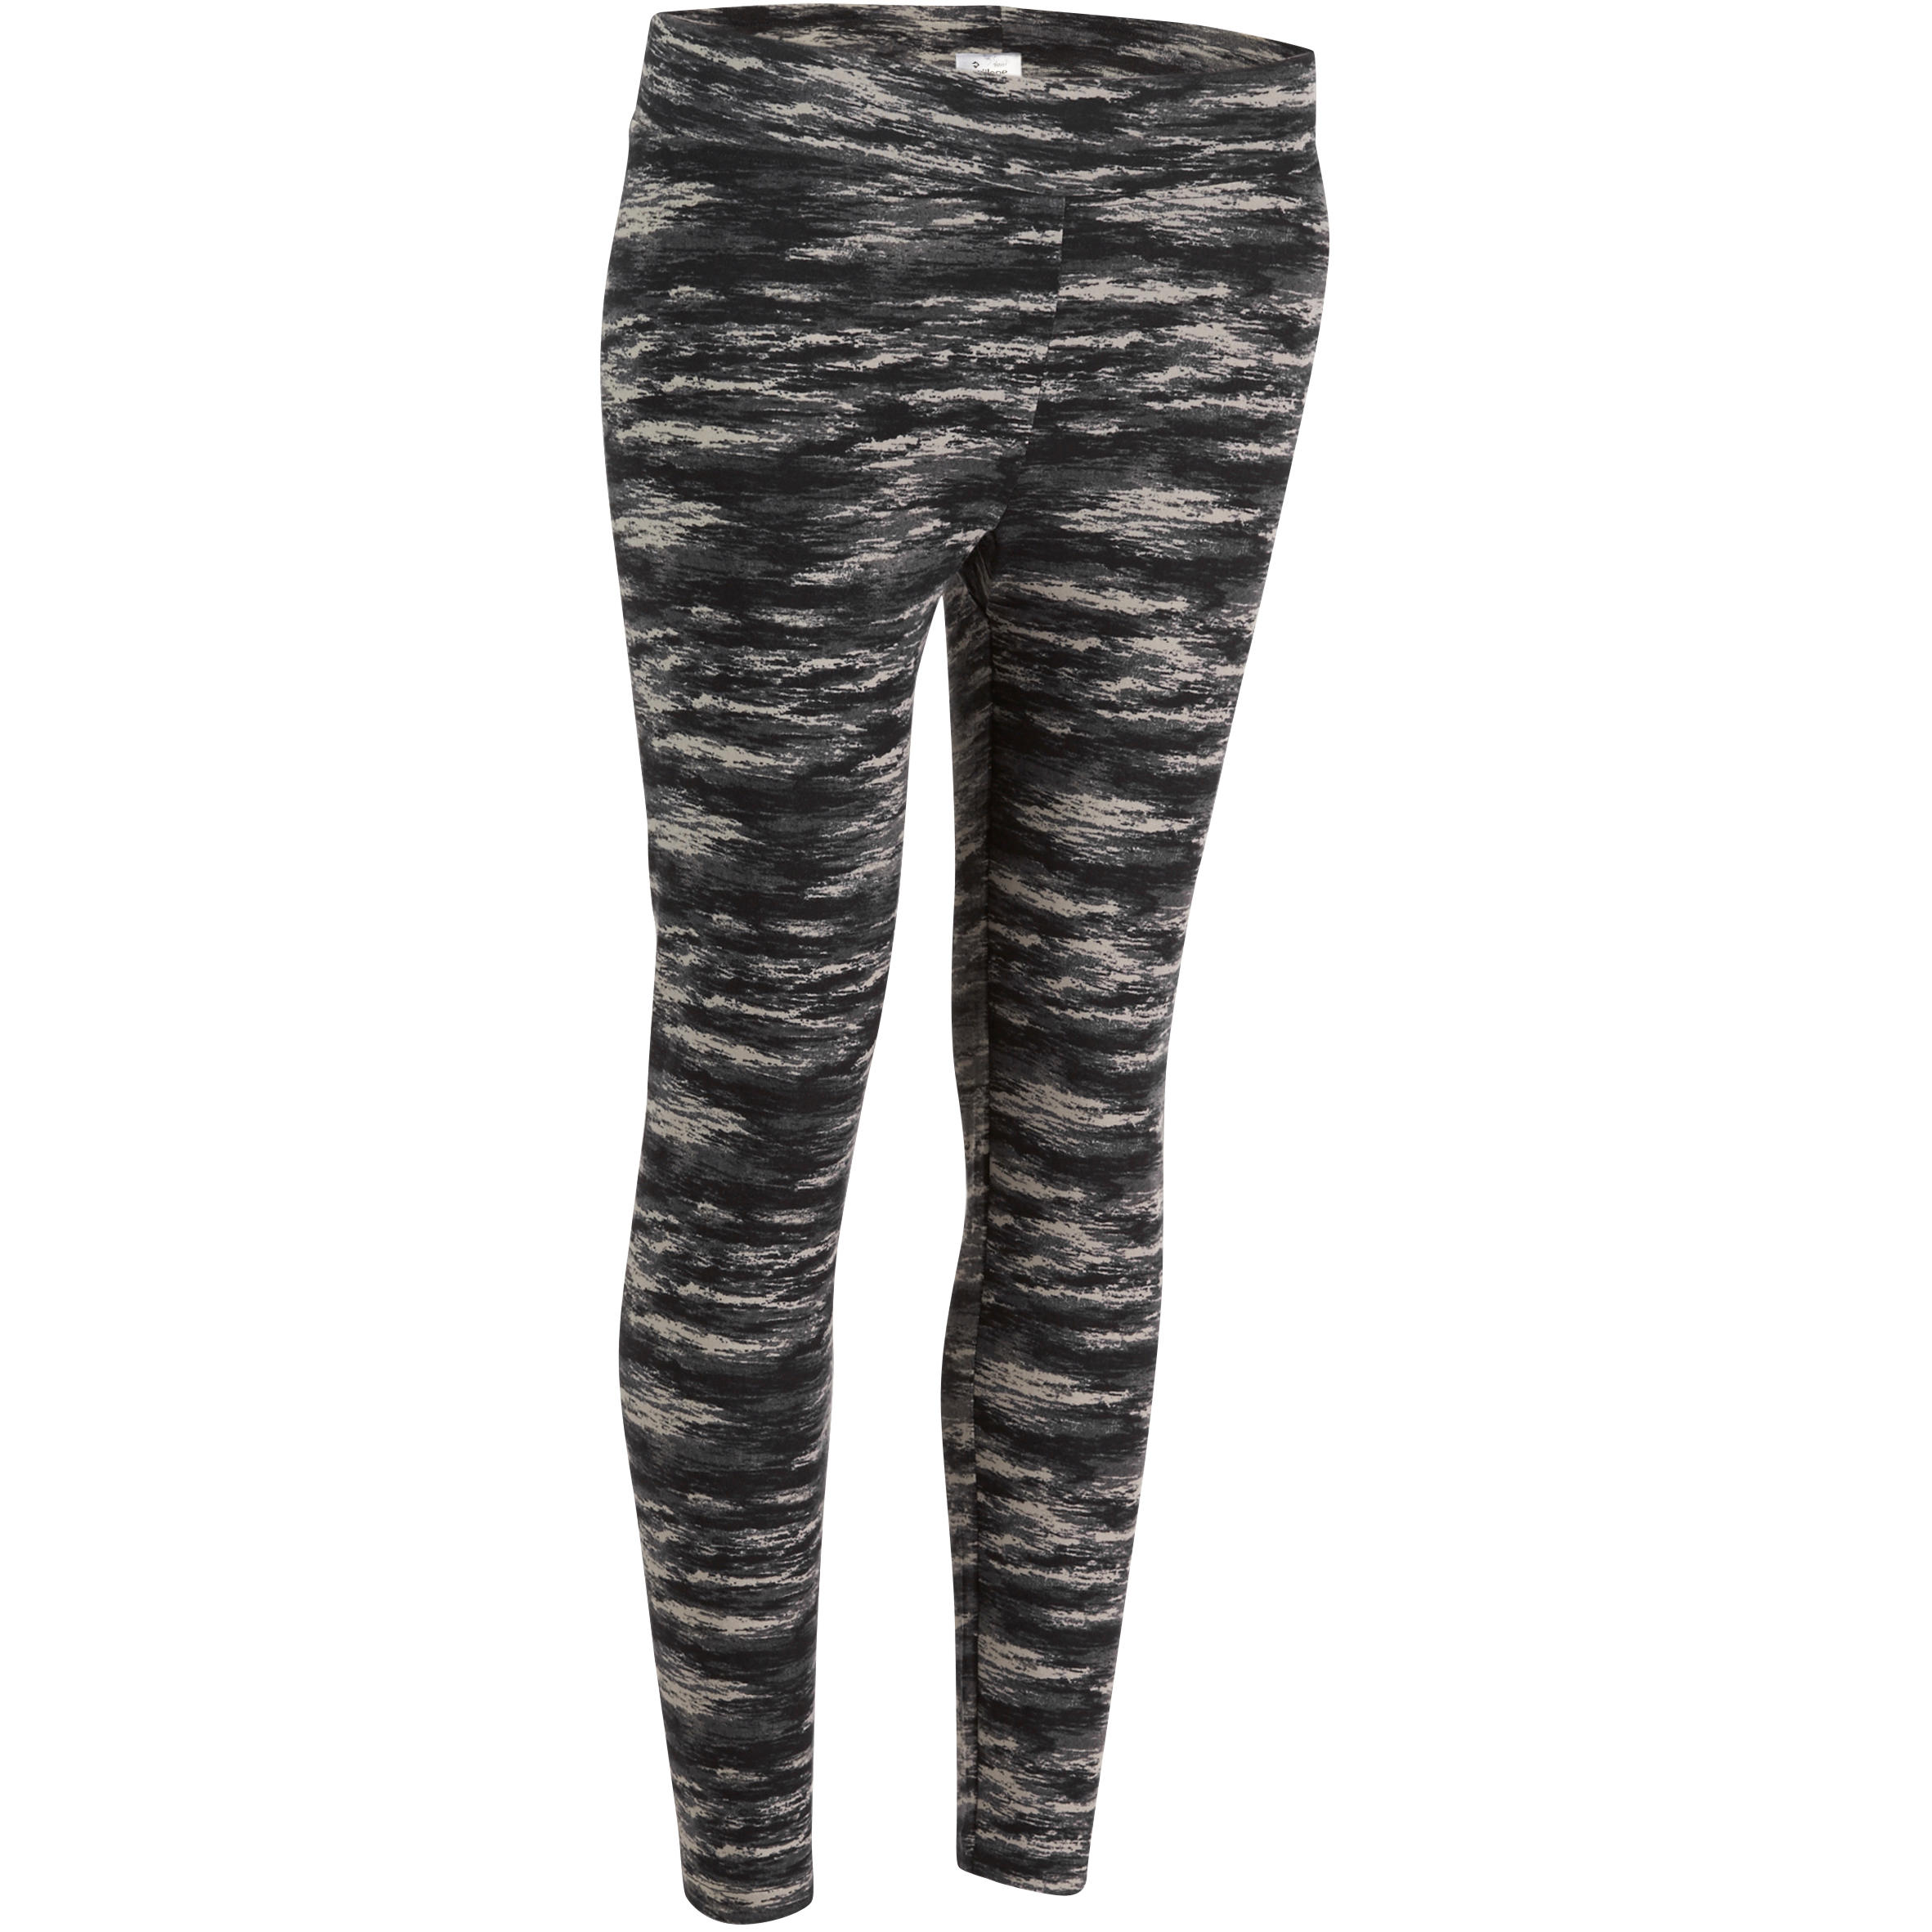 NYAMBA Fit+ Women's Slim-Fit 7/8 Fitness Camouflage Print Leggings - Black/Grey